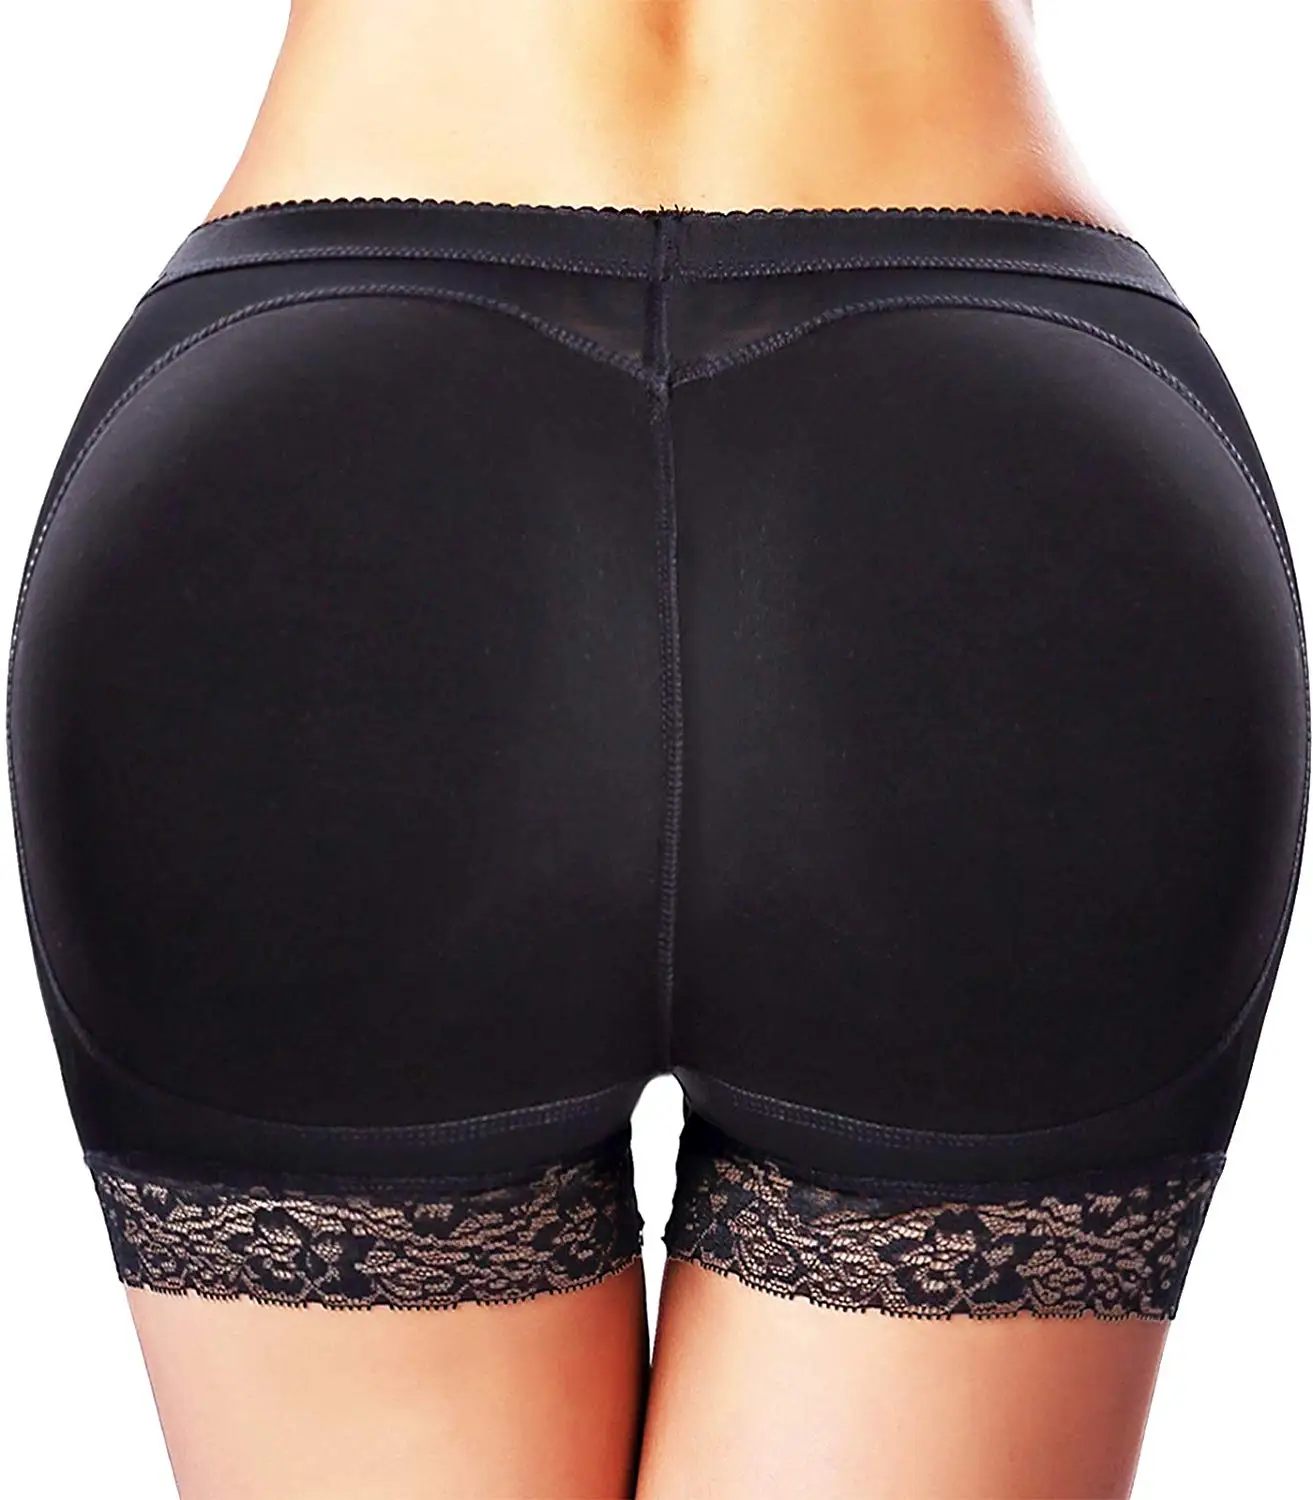 Buy Butt Lifter Hip Enhancer Pads Underwear Shapewear Lace Padded